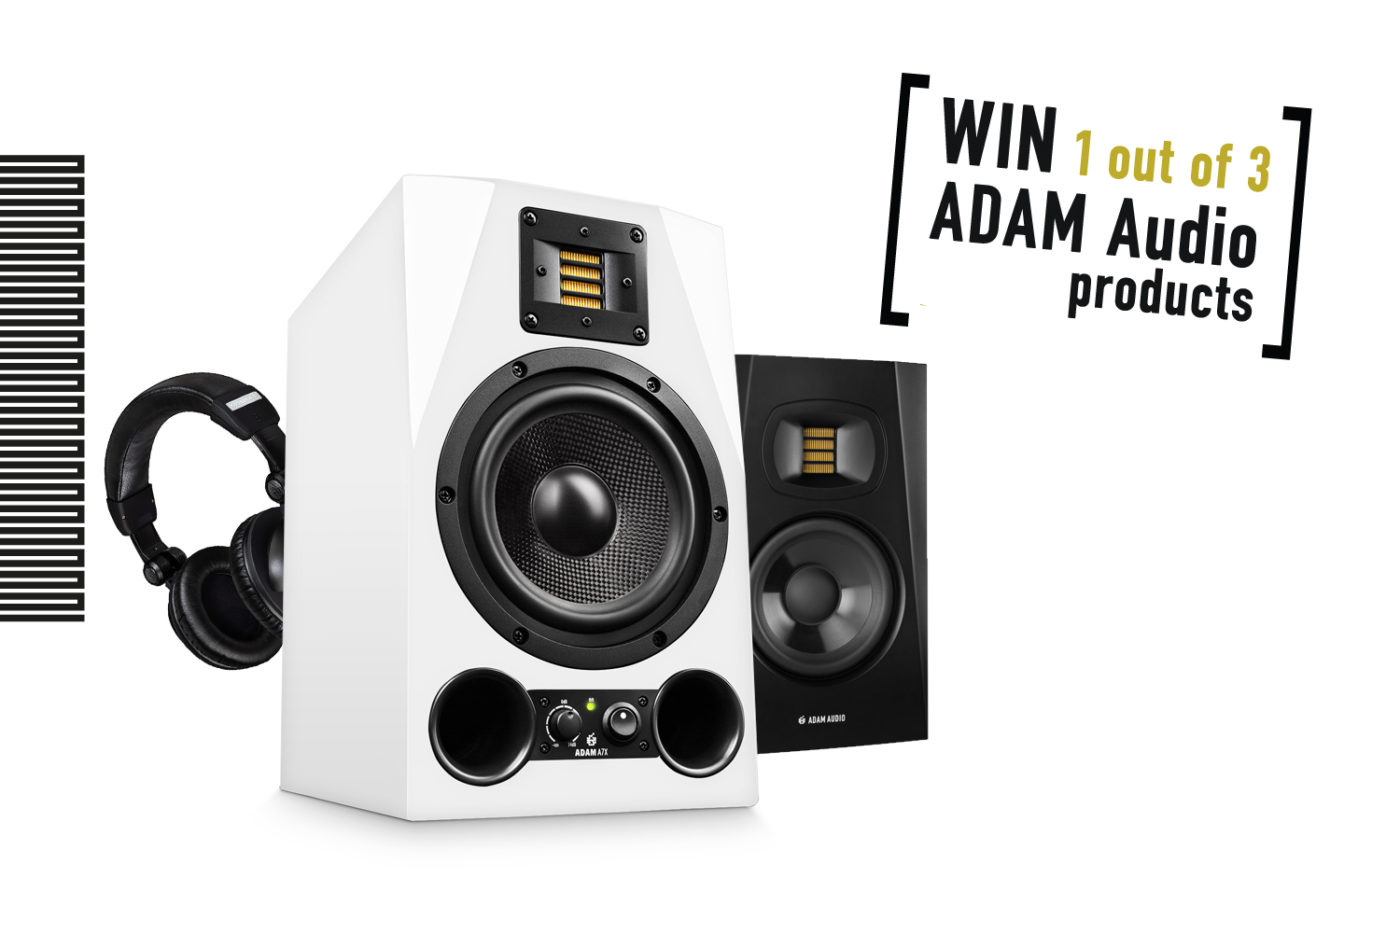 ADAM Audio – Win a special edition 